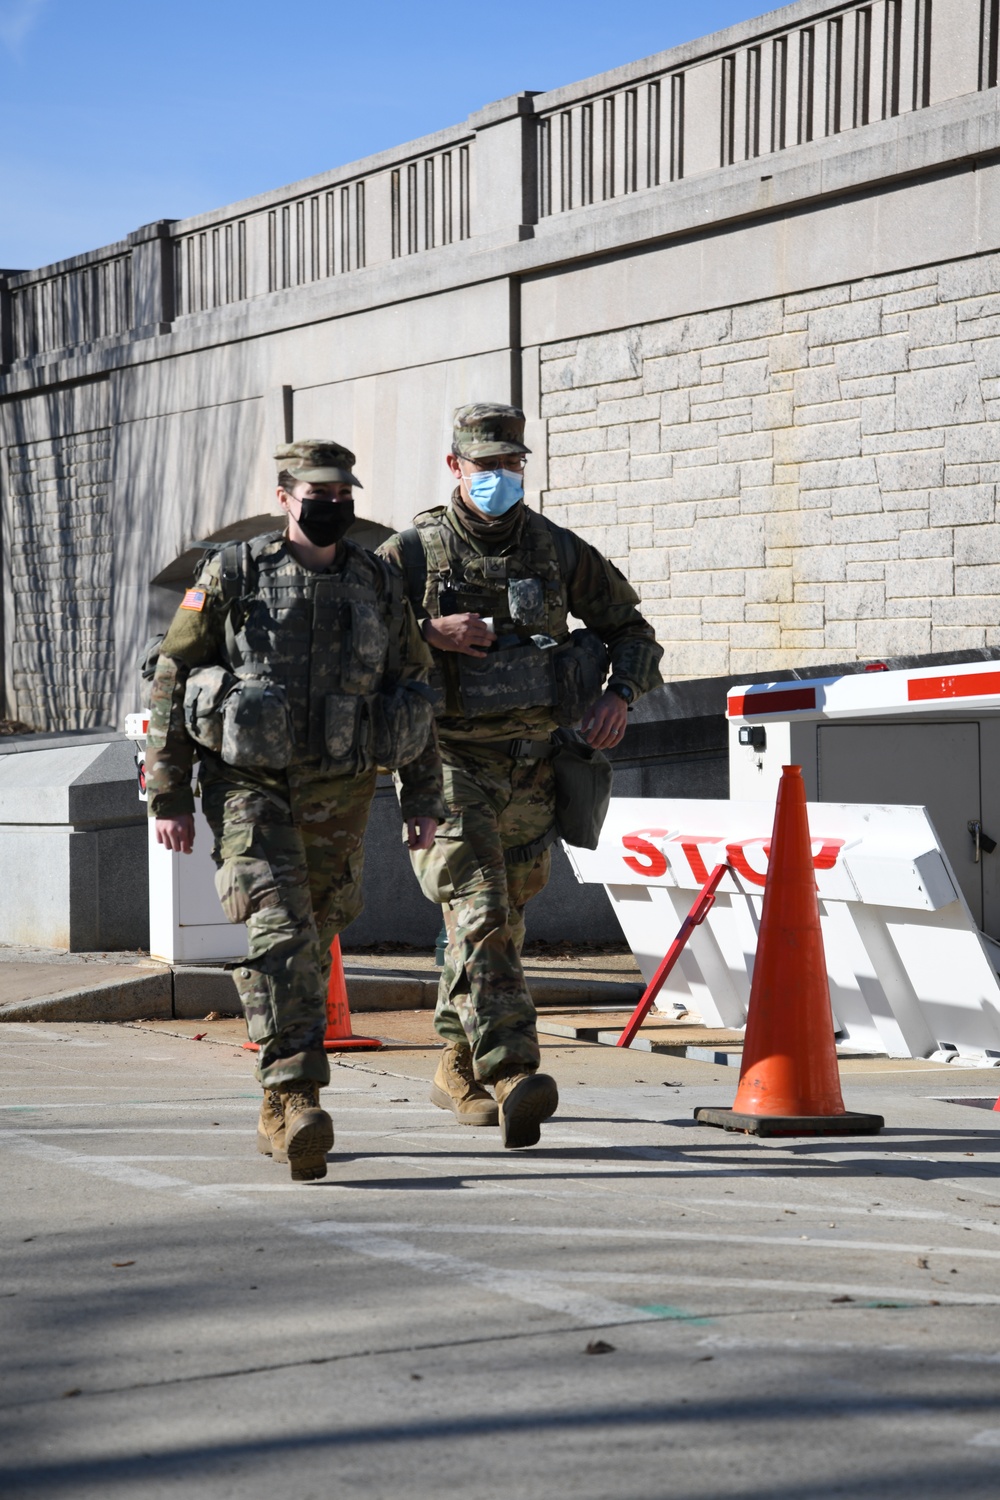 U.S. Army Spc. Victoria Orlando, a combat medic specialist, walks along the perimeter of a building in Washington, D.C., Jan. 14, 2021